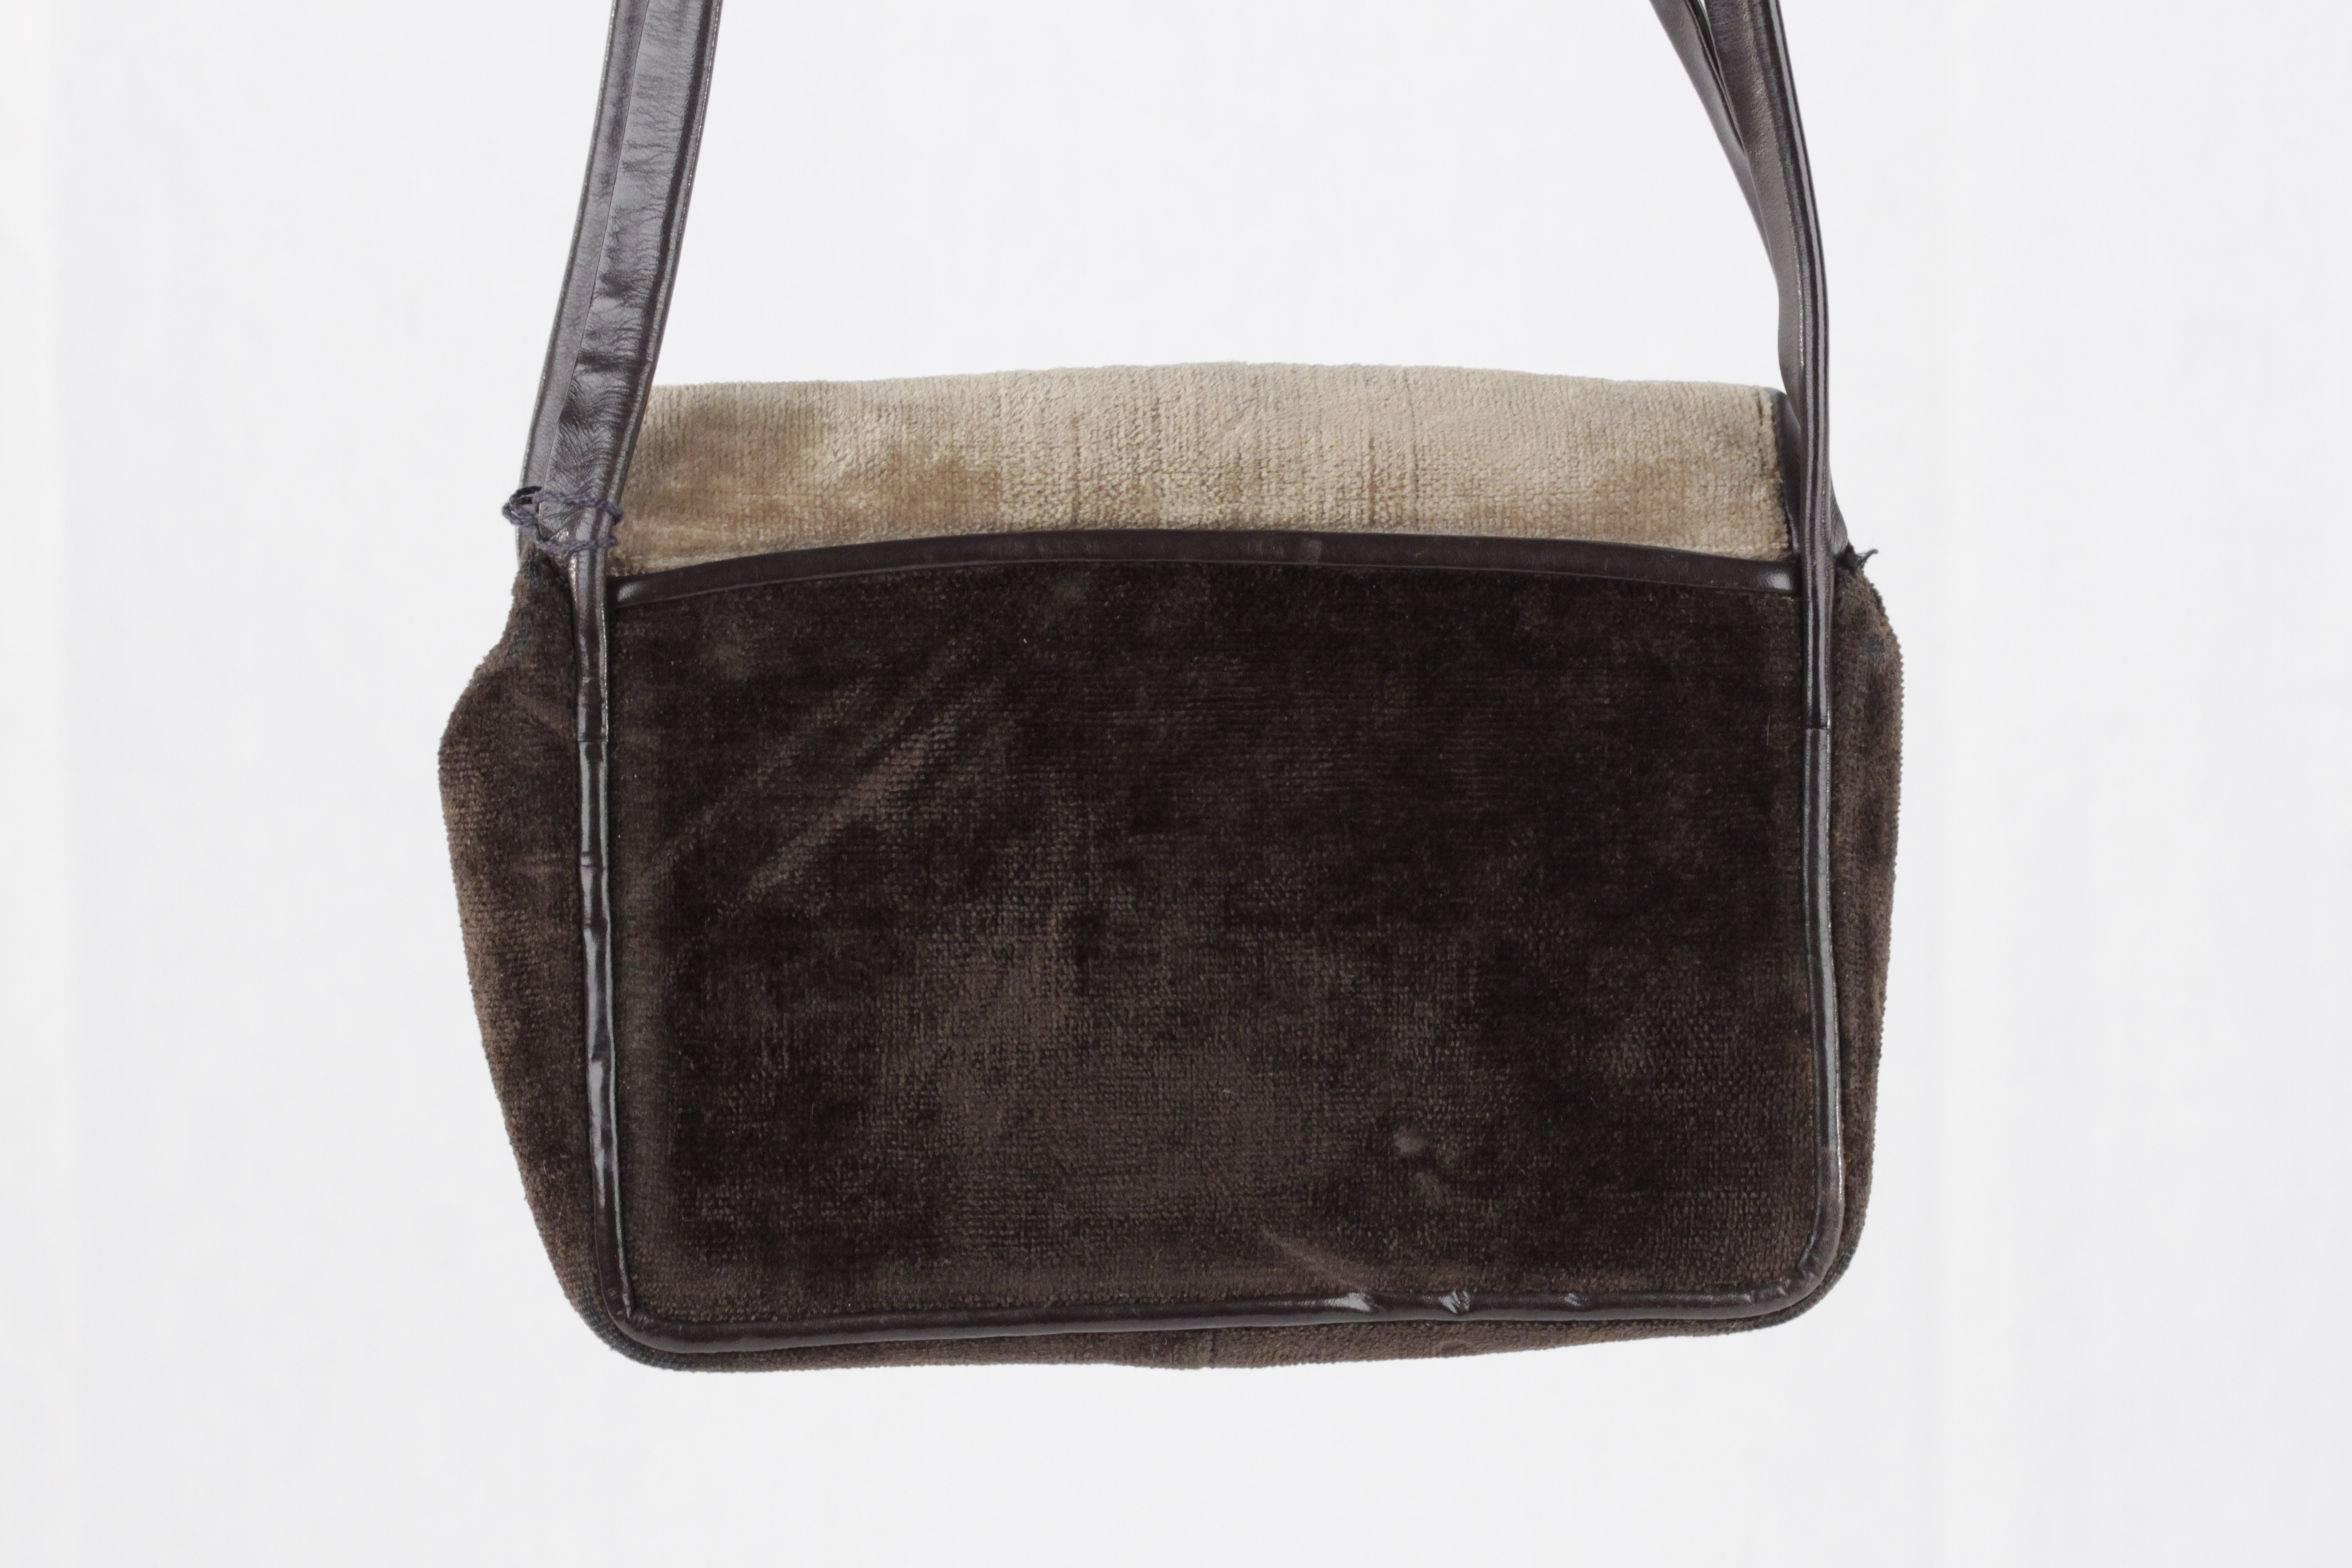 ROBERTA DI CAMERINO VINTAGE Brown & Beige Velvet SHOULDER BAG Handbag 1